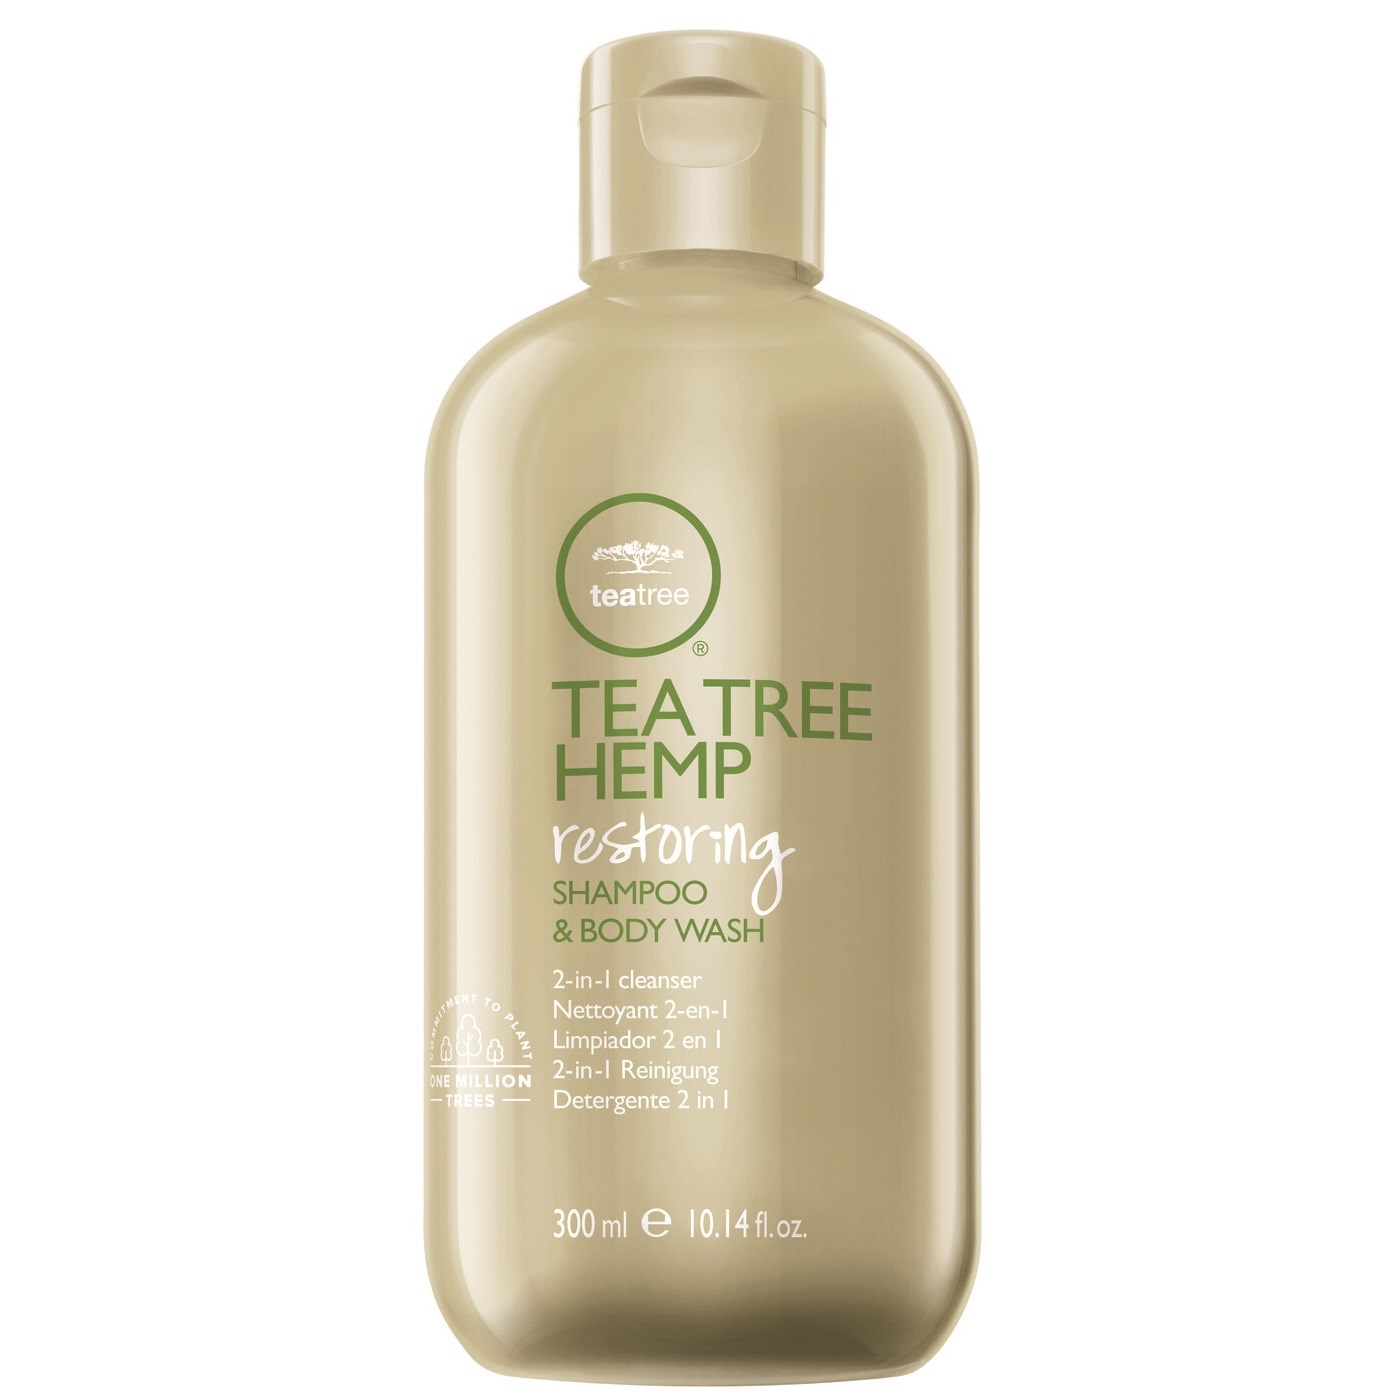 Paul Mitchell Tea Tree Hemp Restoring Shampoo & Body Wash, 300ml